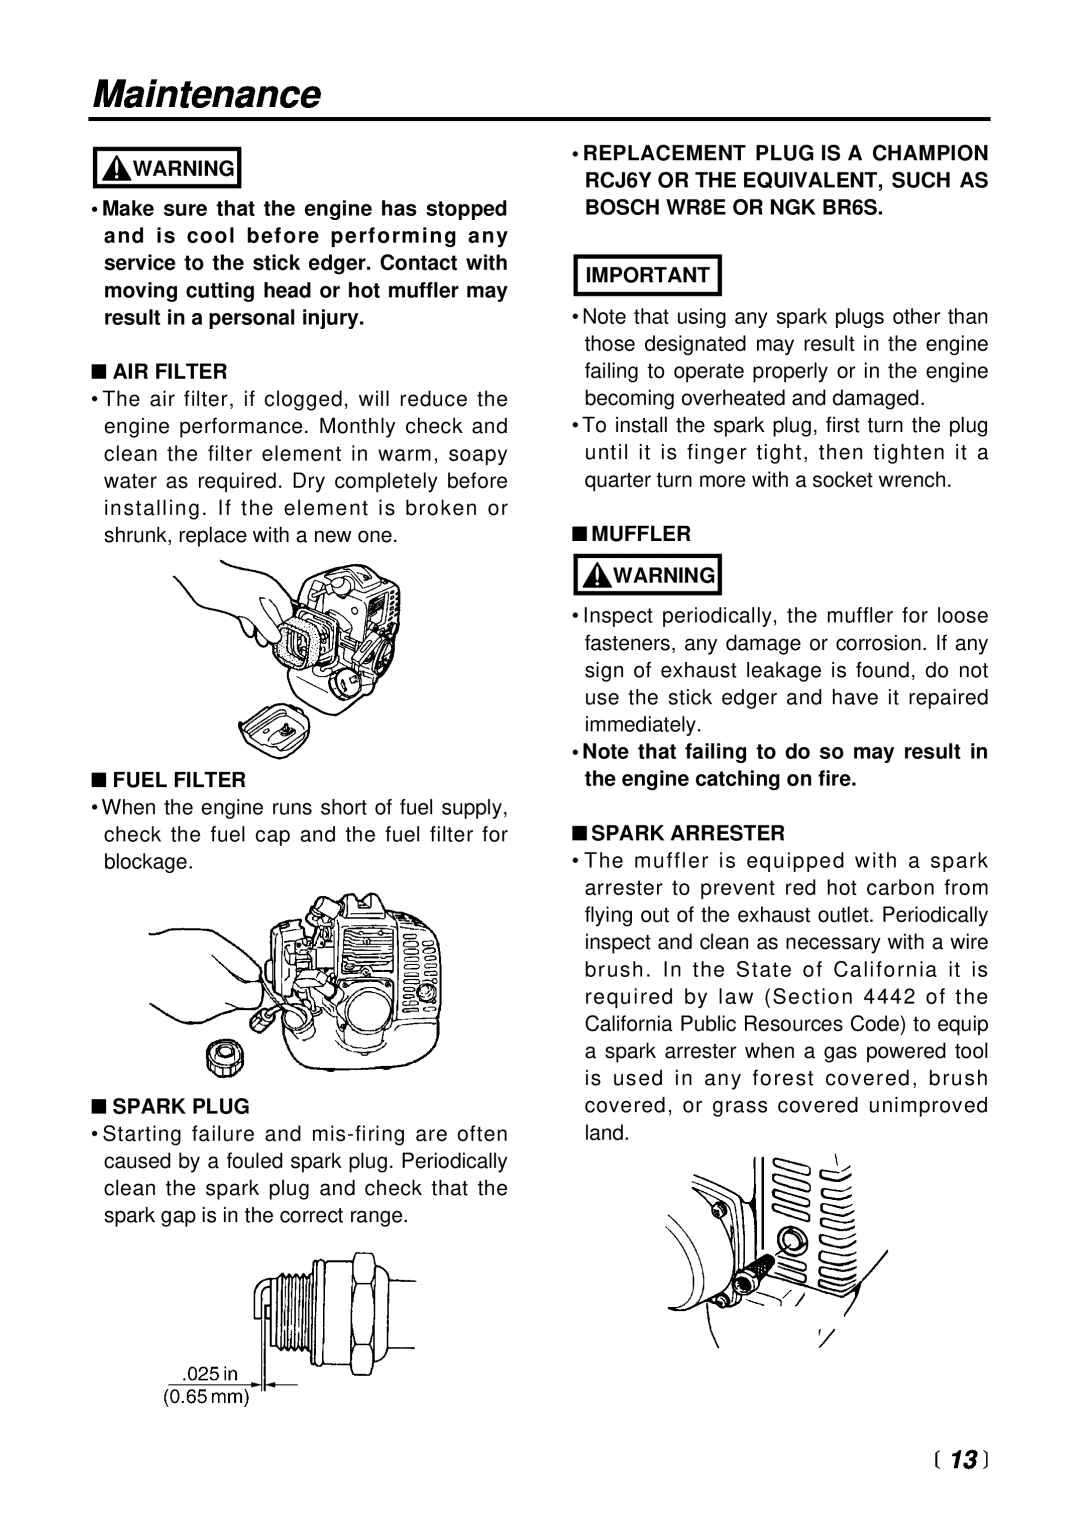 RedMax HE2601 manual 13 , Maintenance, Air Filter, Fuel Filter, Spark Plug, Muffler, Spark Arrester 